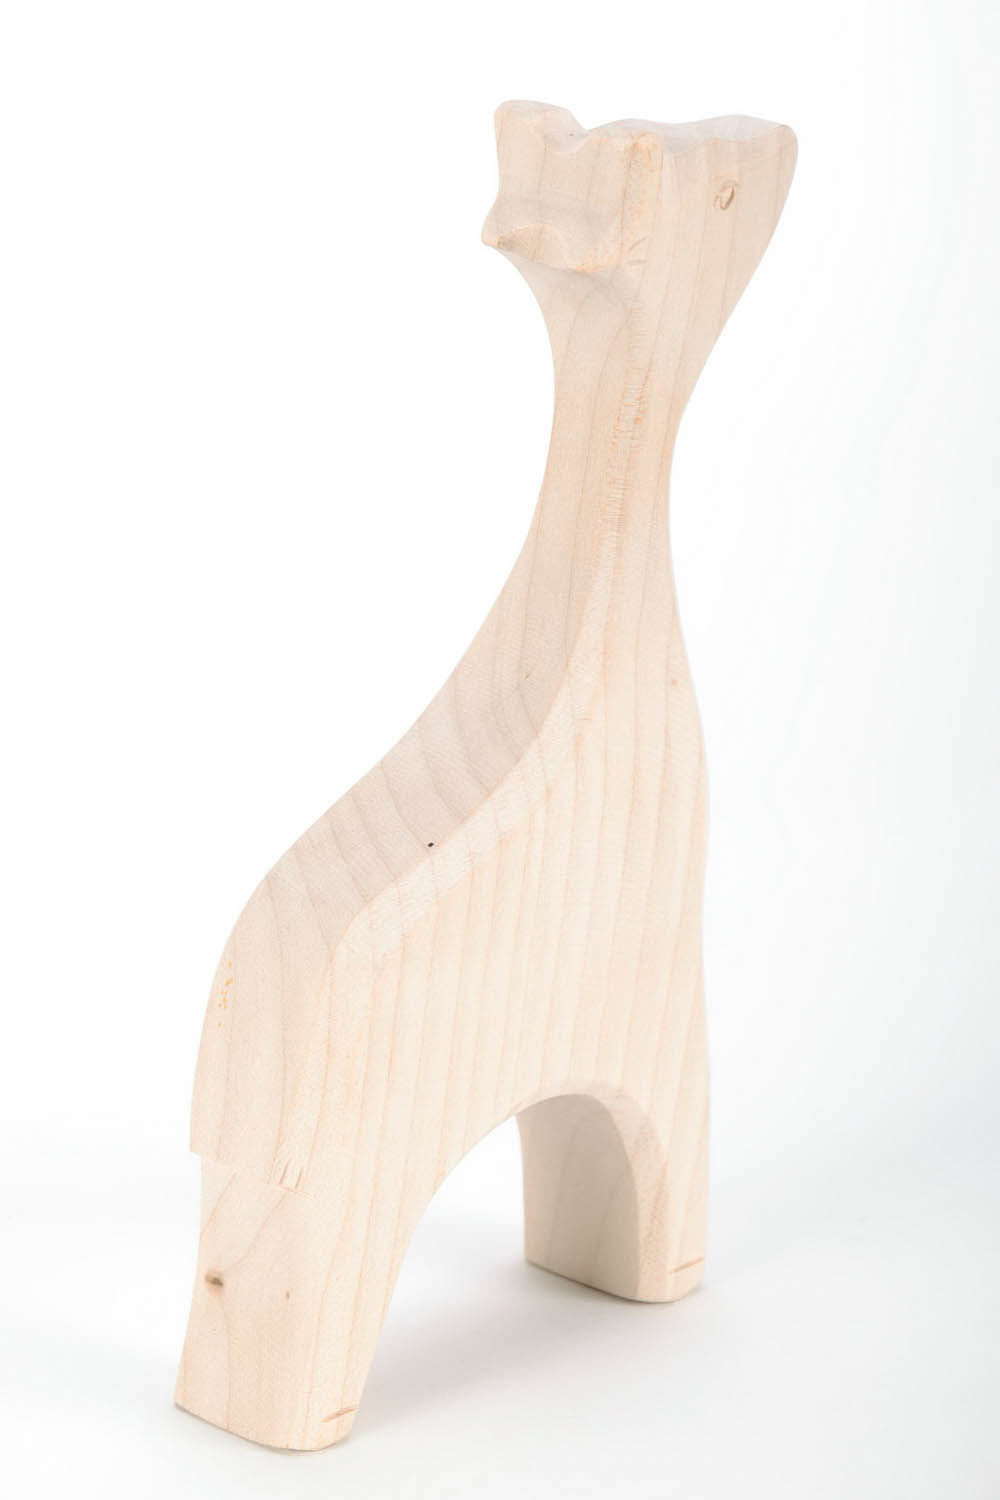 Jouet en bois décoratif Girafe fait main  photo 4